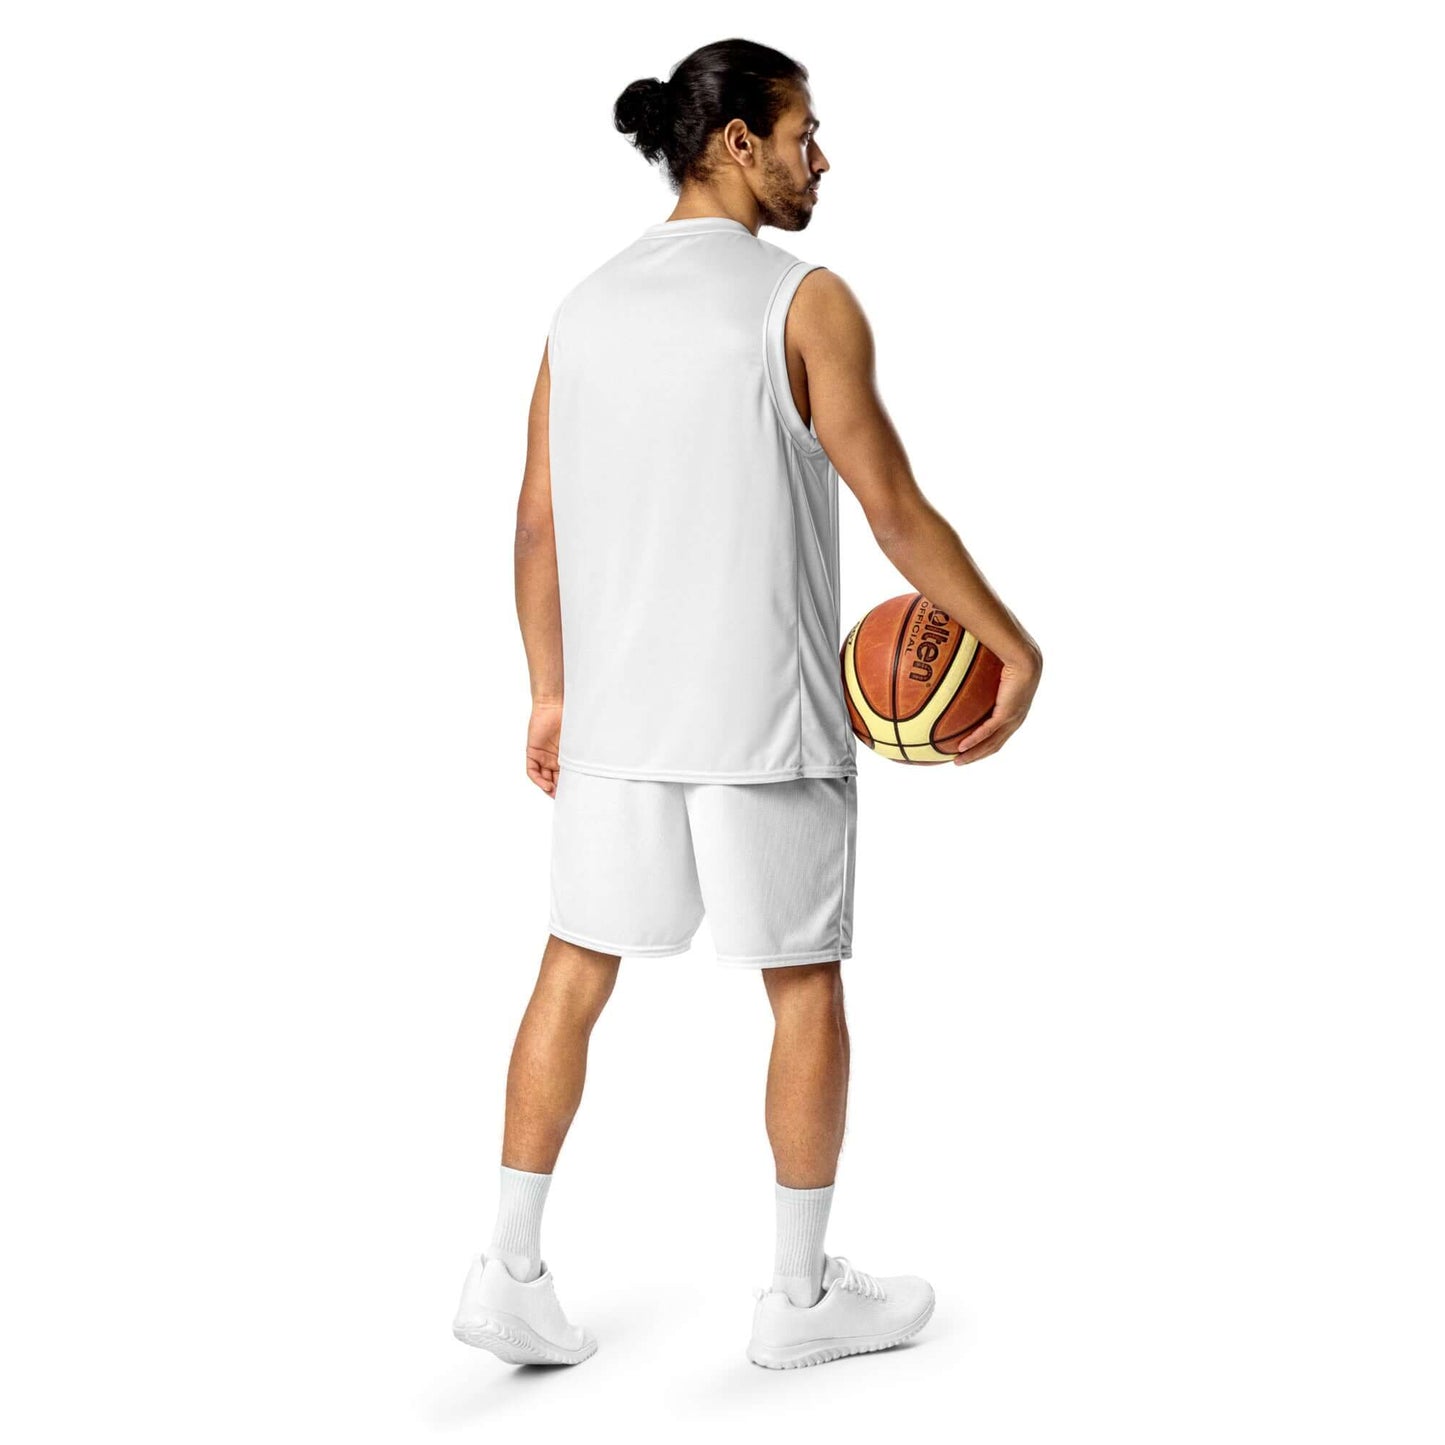 Basketballtrikot (Männer)